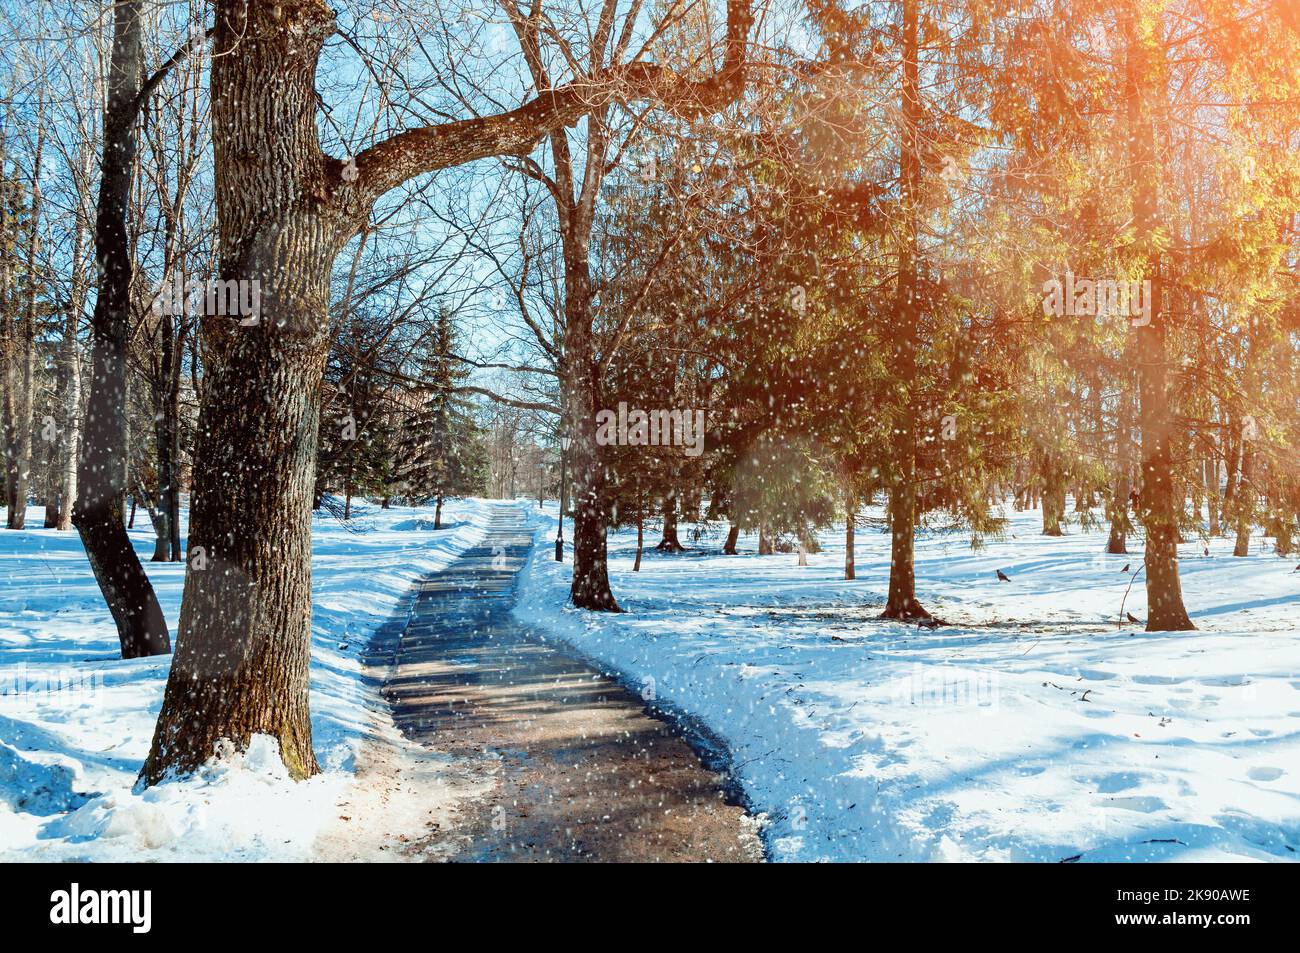 Winter landscape, city park in sunny day under falling snow, colorful winter landscape scene Stock Photo